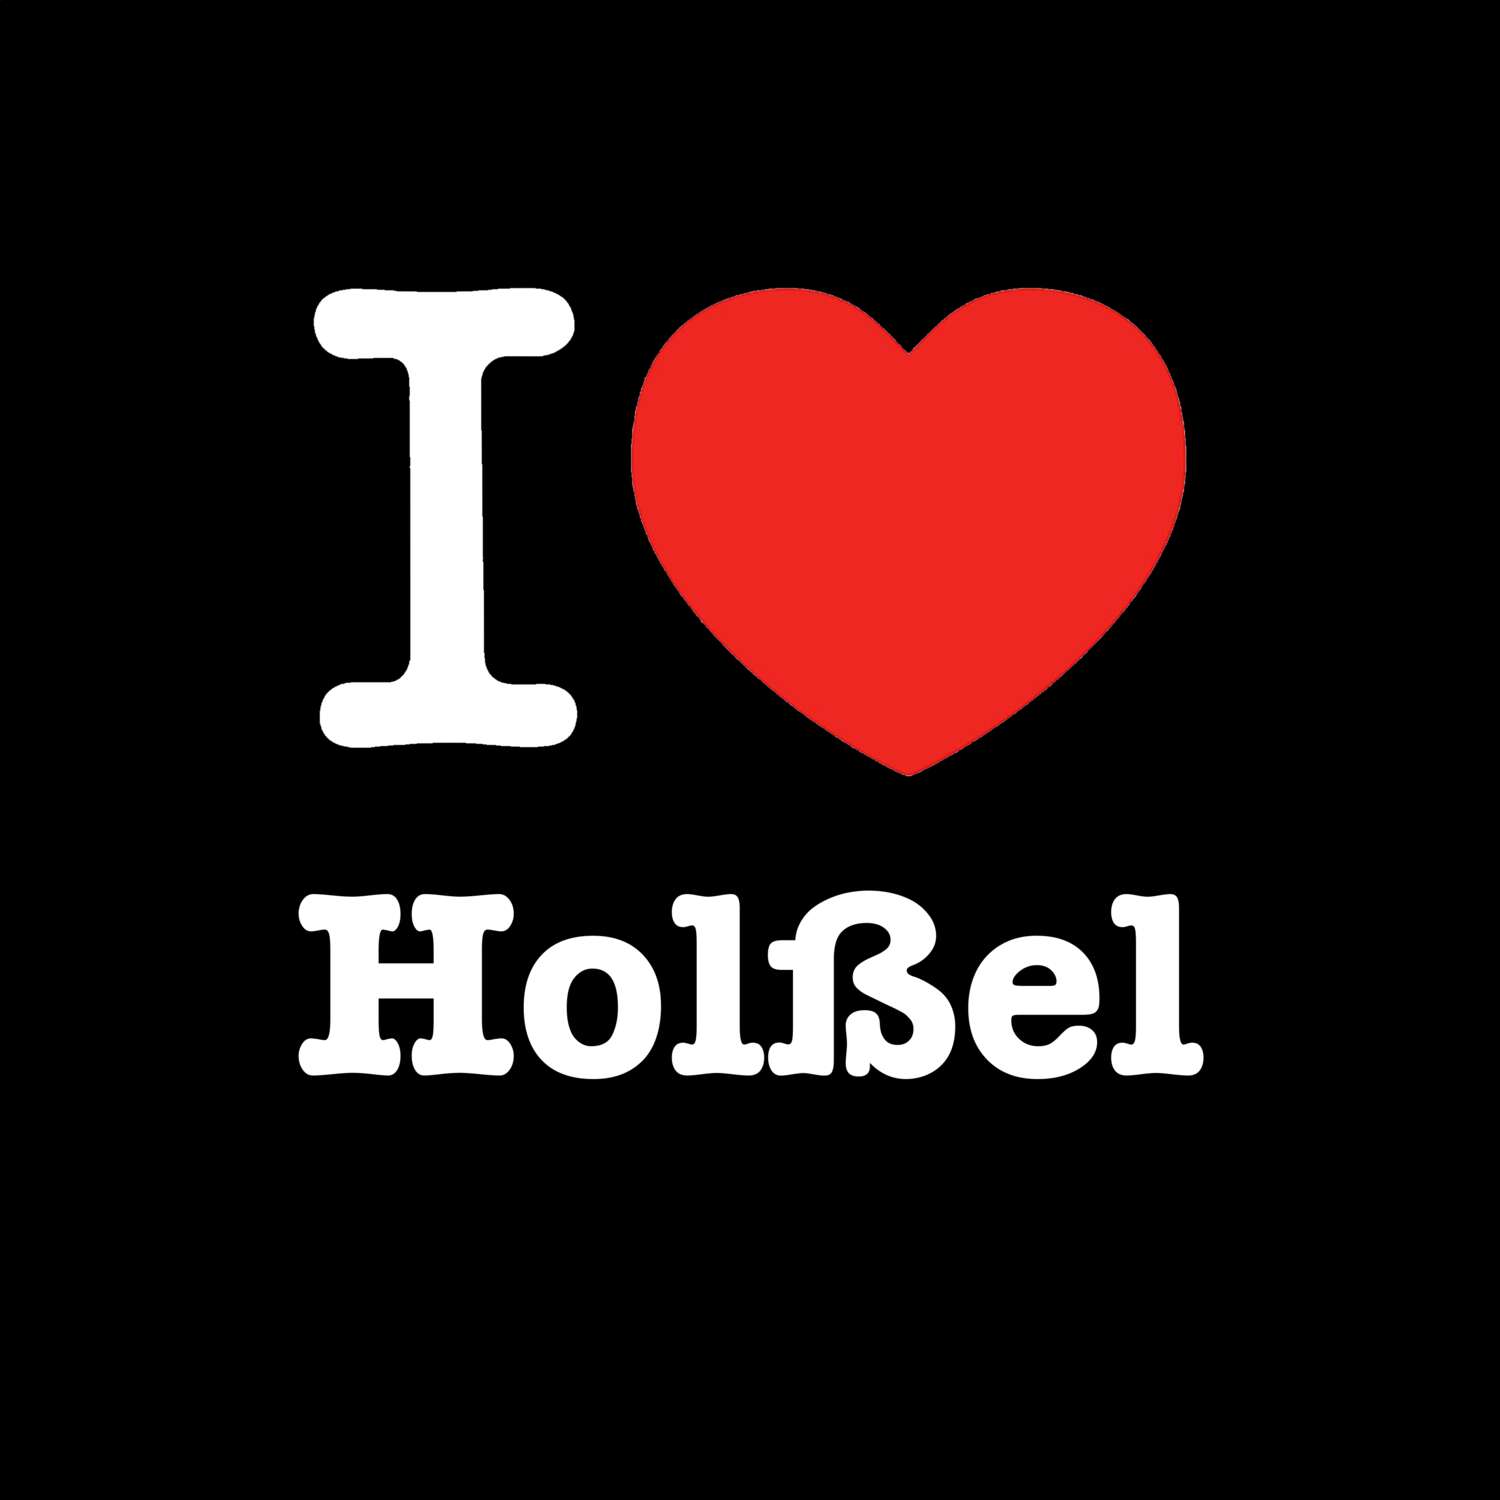 Holßel T-Shirt »I love«